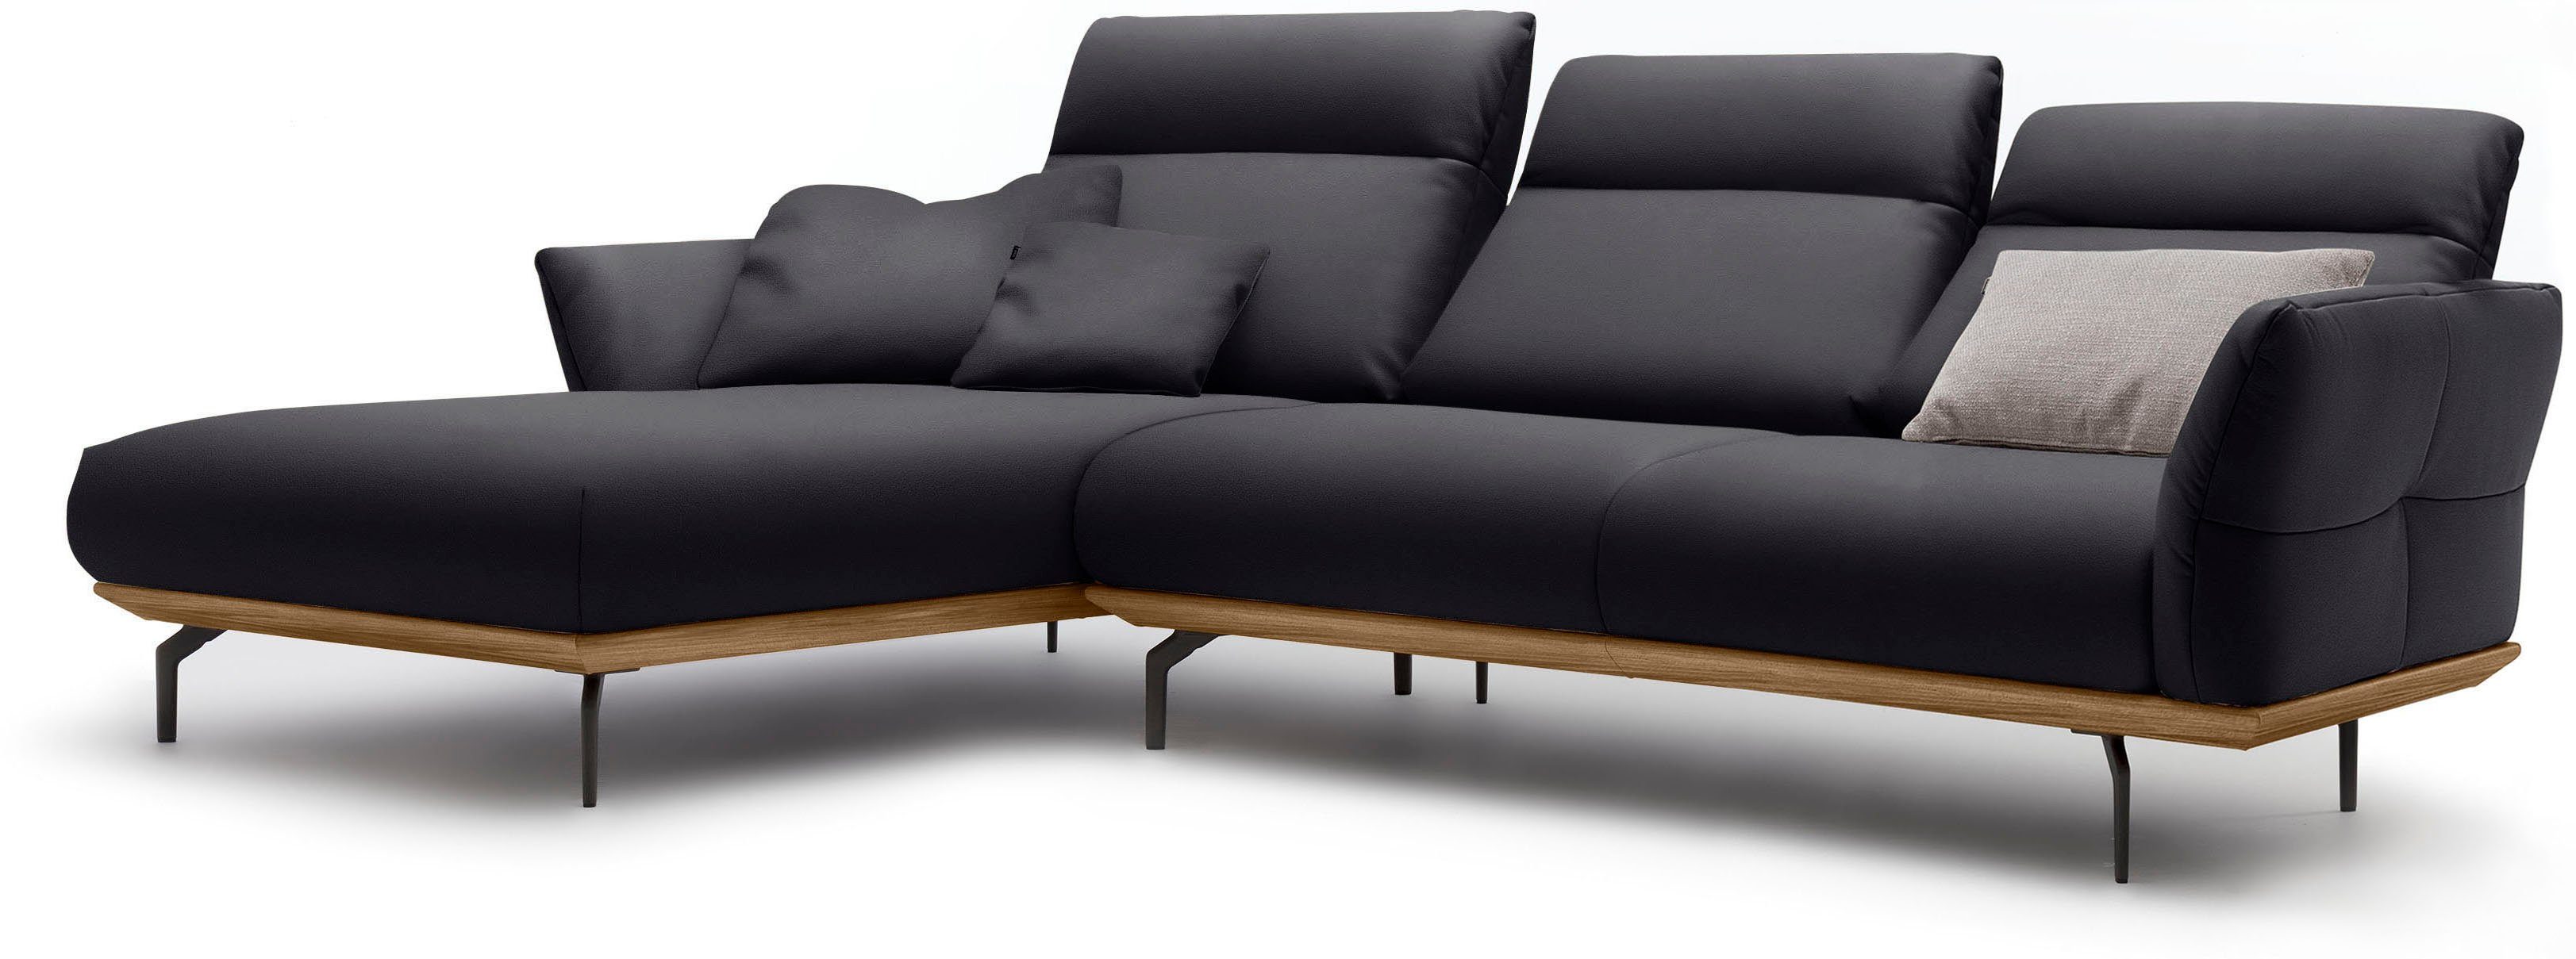 Ecksofa hülsta Breite sofa Umbragrau, Winkelfüße Sockel in Nussbaum, 298 cm hs.460, in